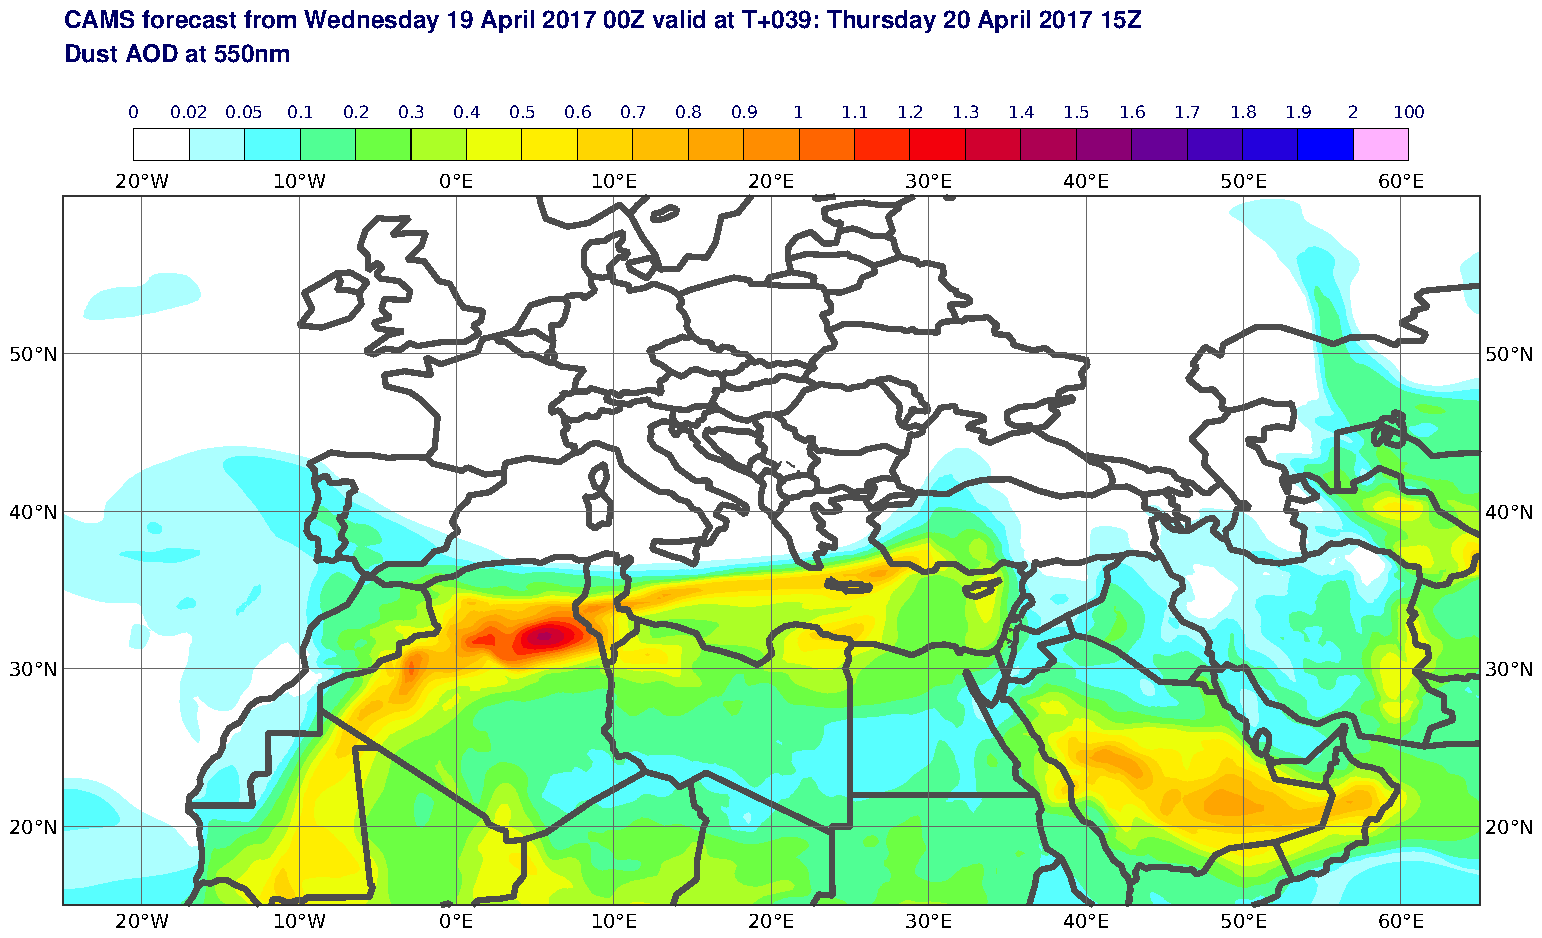 Dust AOD at 550nm valid at T39 - 2017-04-20 15:00